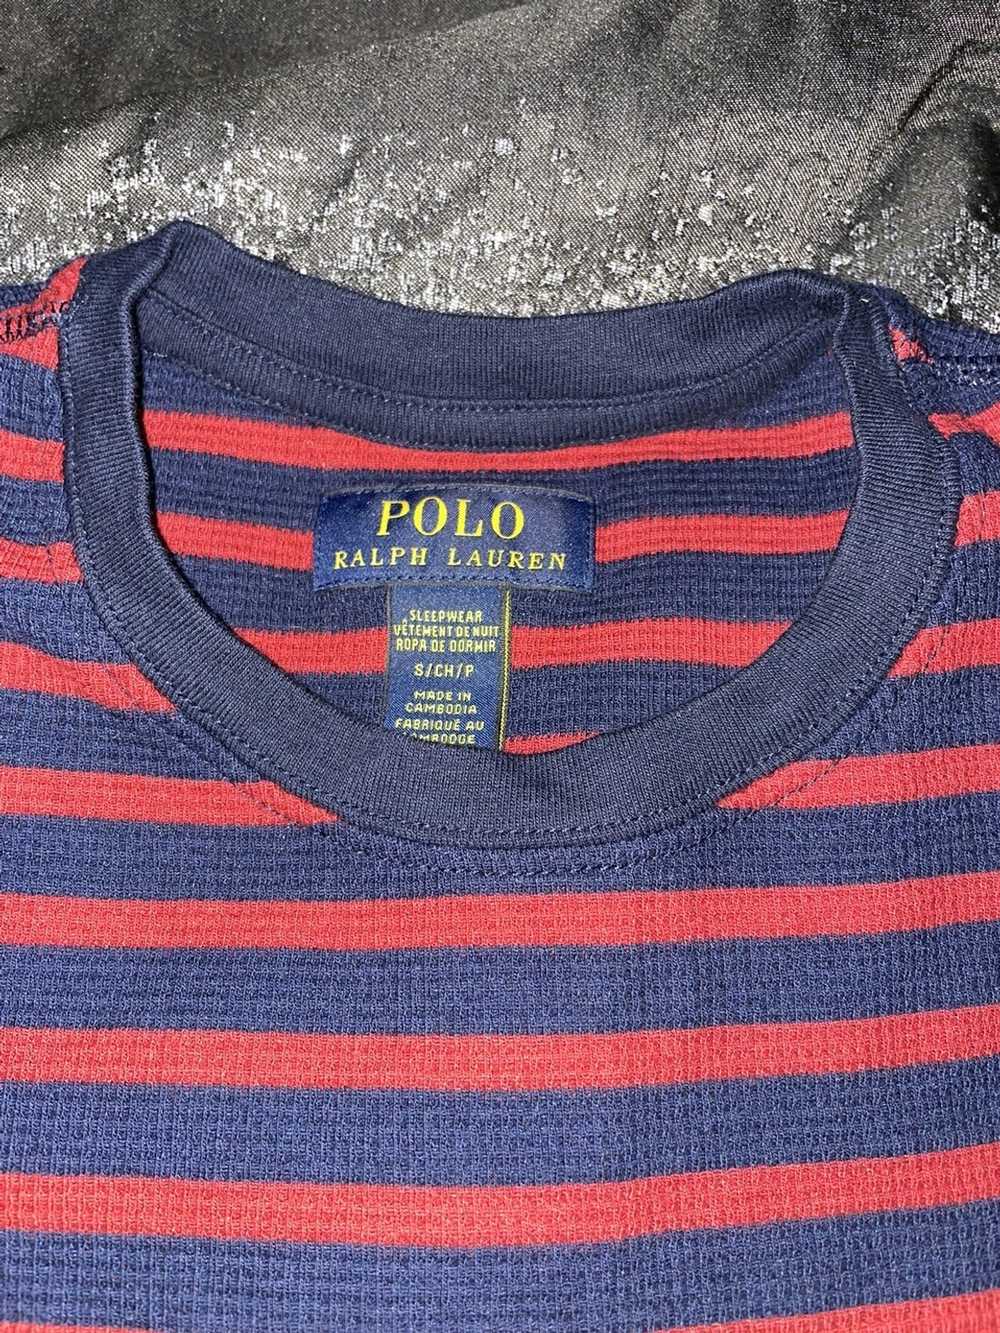 Polo Ralph Lauren Sleep wear polo - image 2